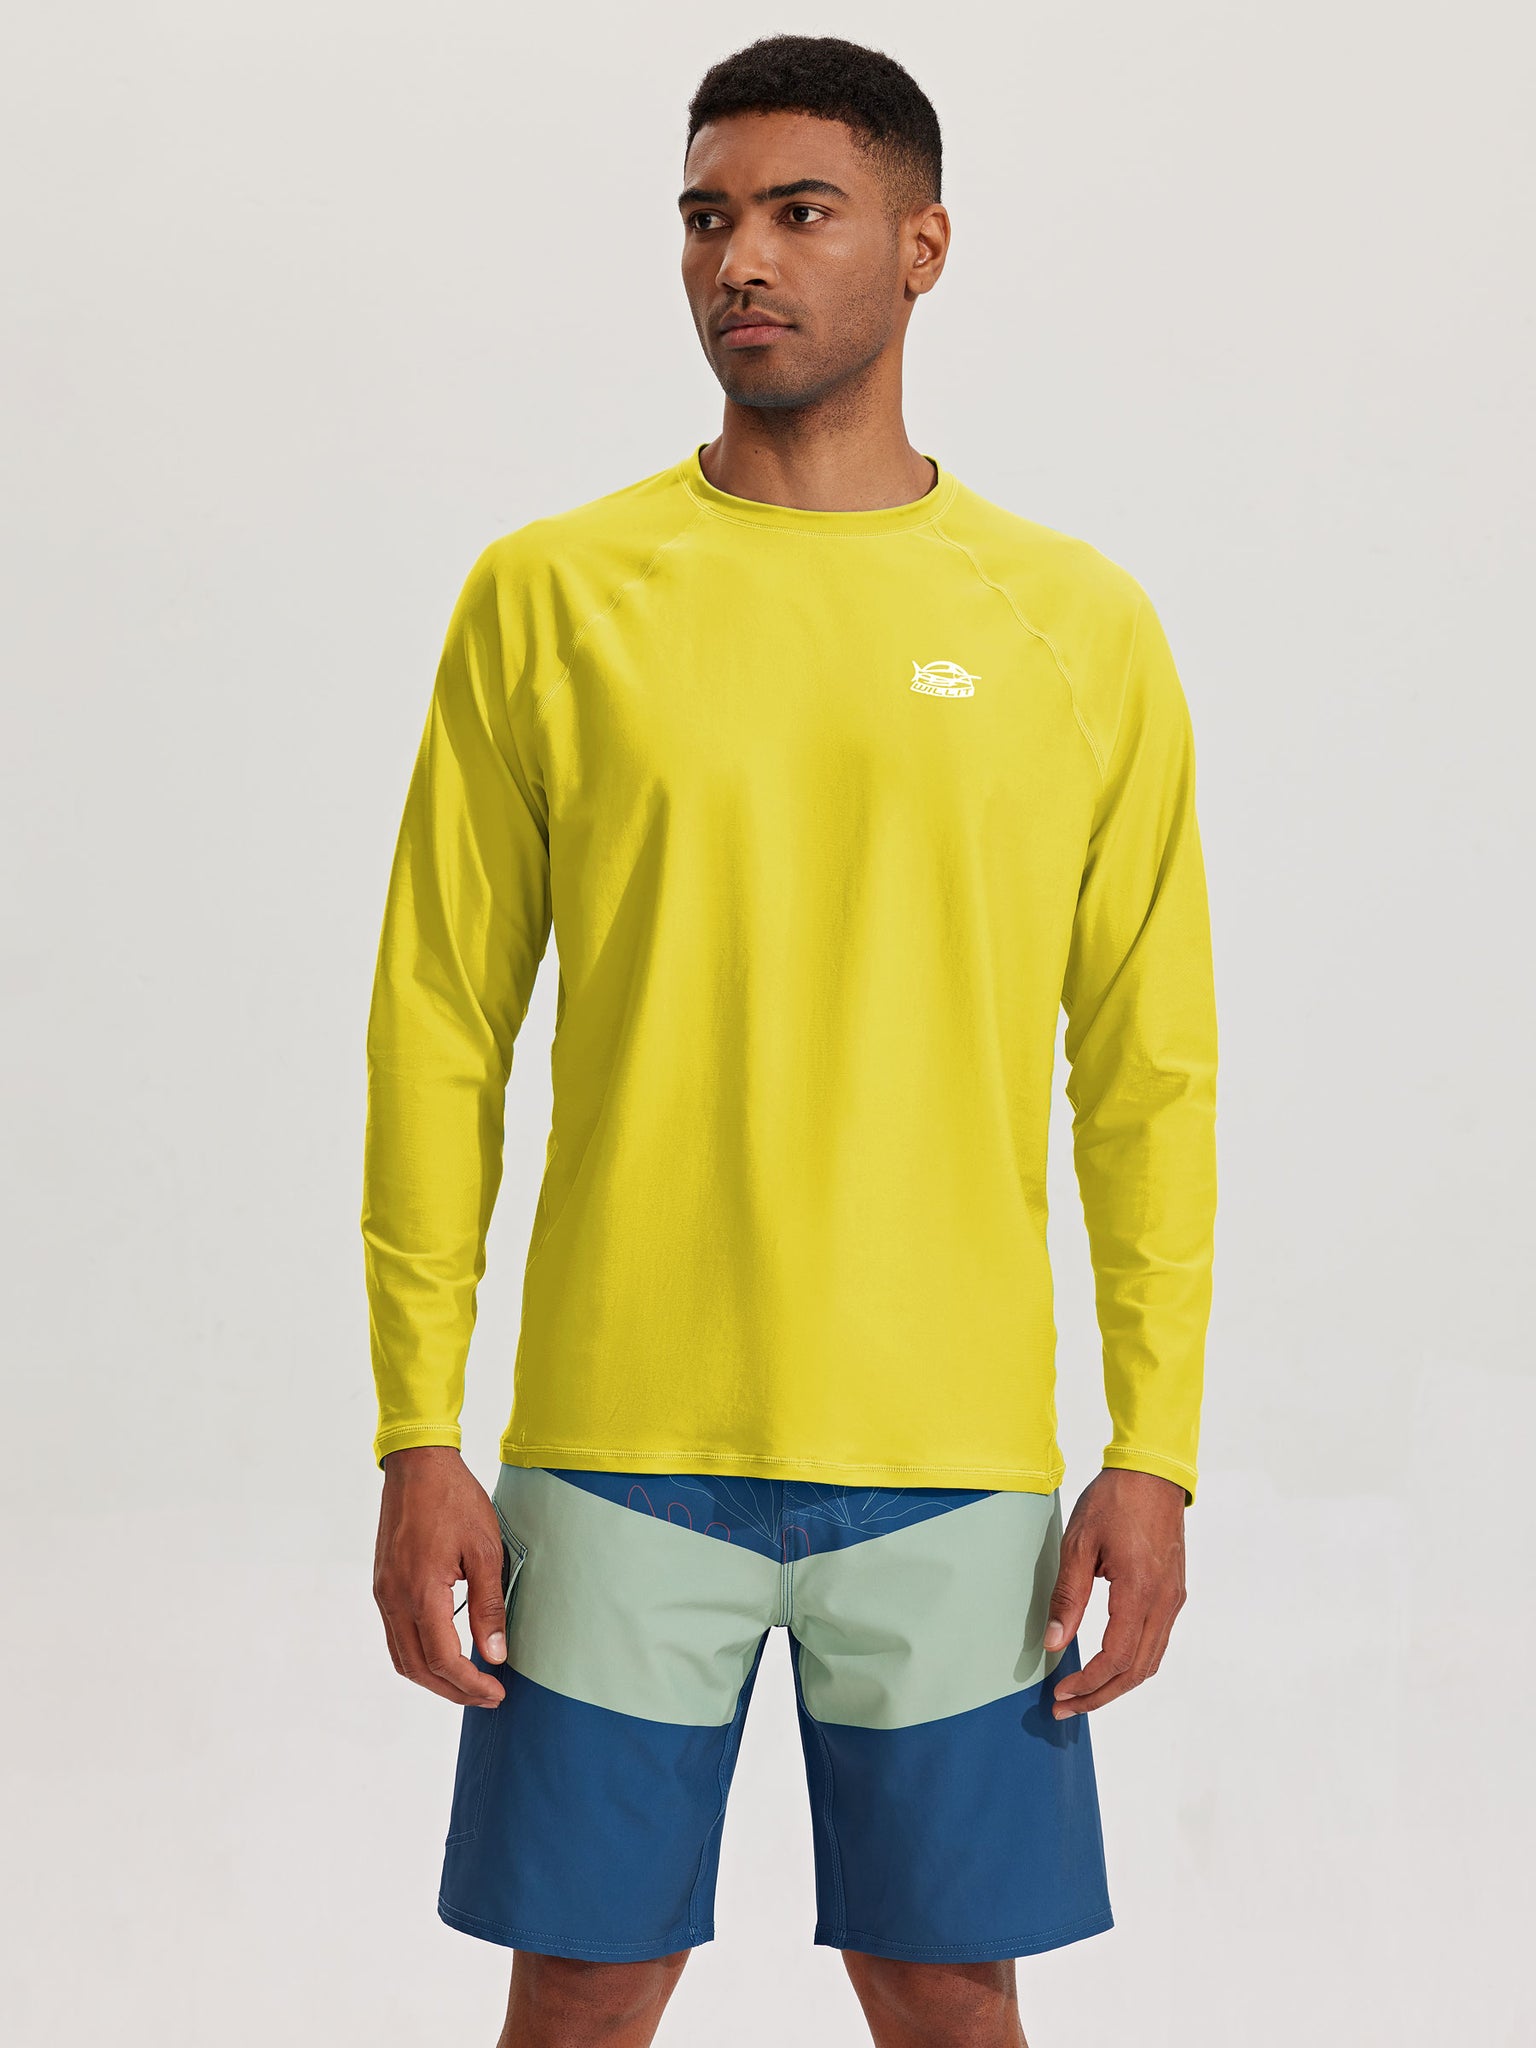 Men's Sun Protection Long Sleeve Shirt_Yellow_model2